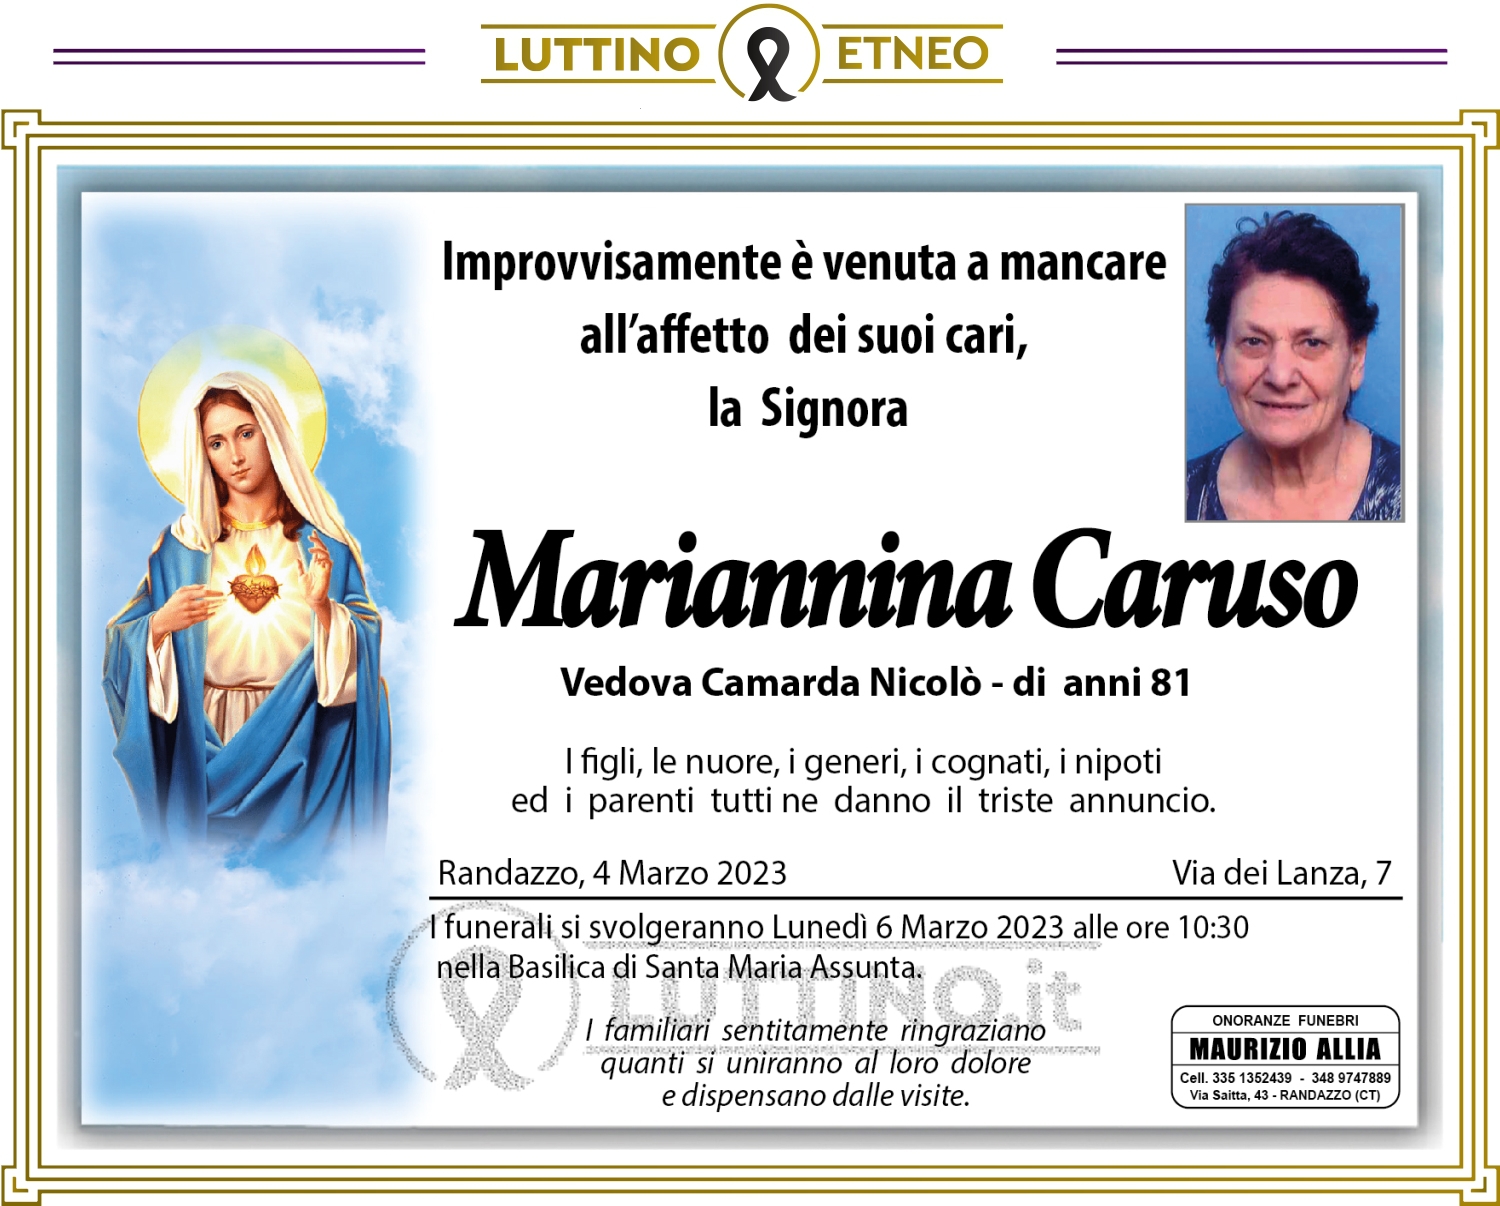 Mariannina Caruso